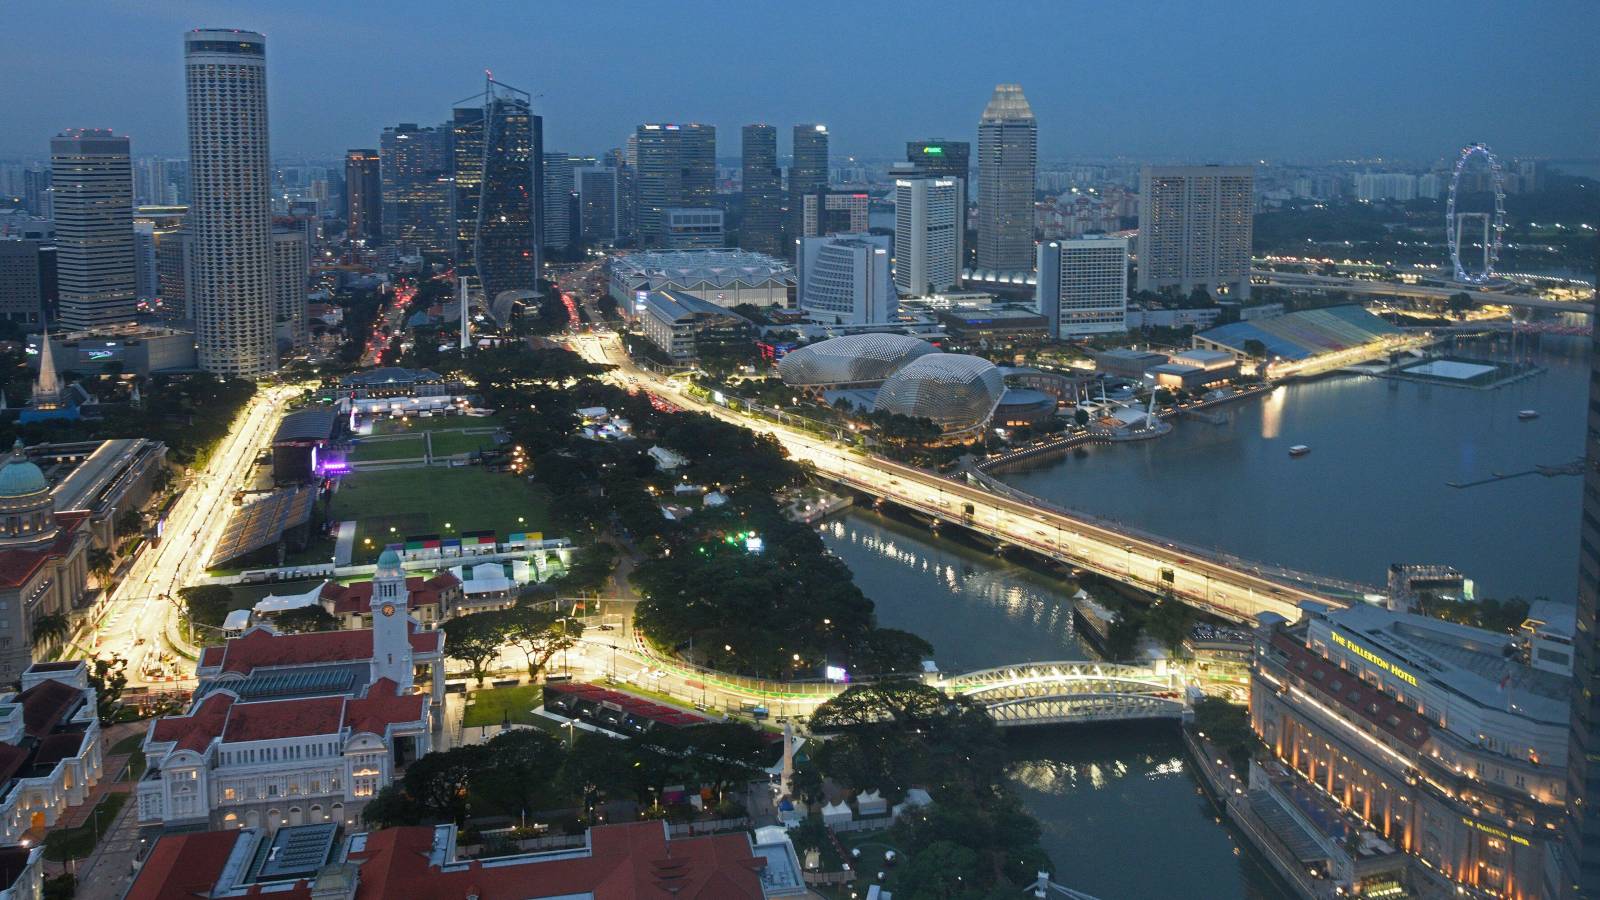 The Marina Bay Street Circuit ahead of the Singapore Grand Prix. Singapore, September 2022.